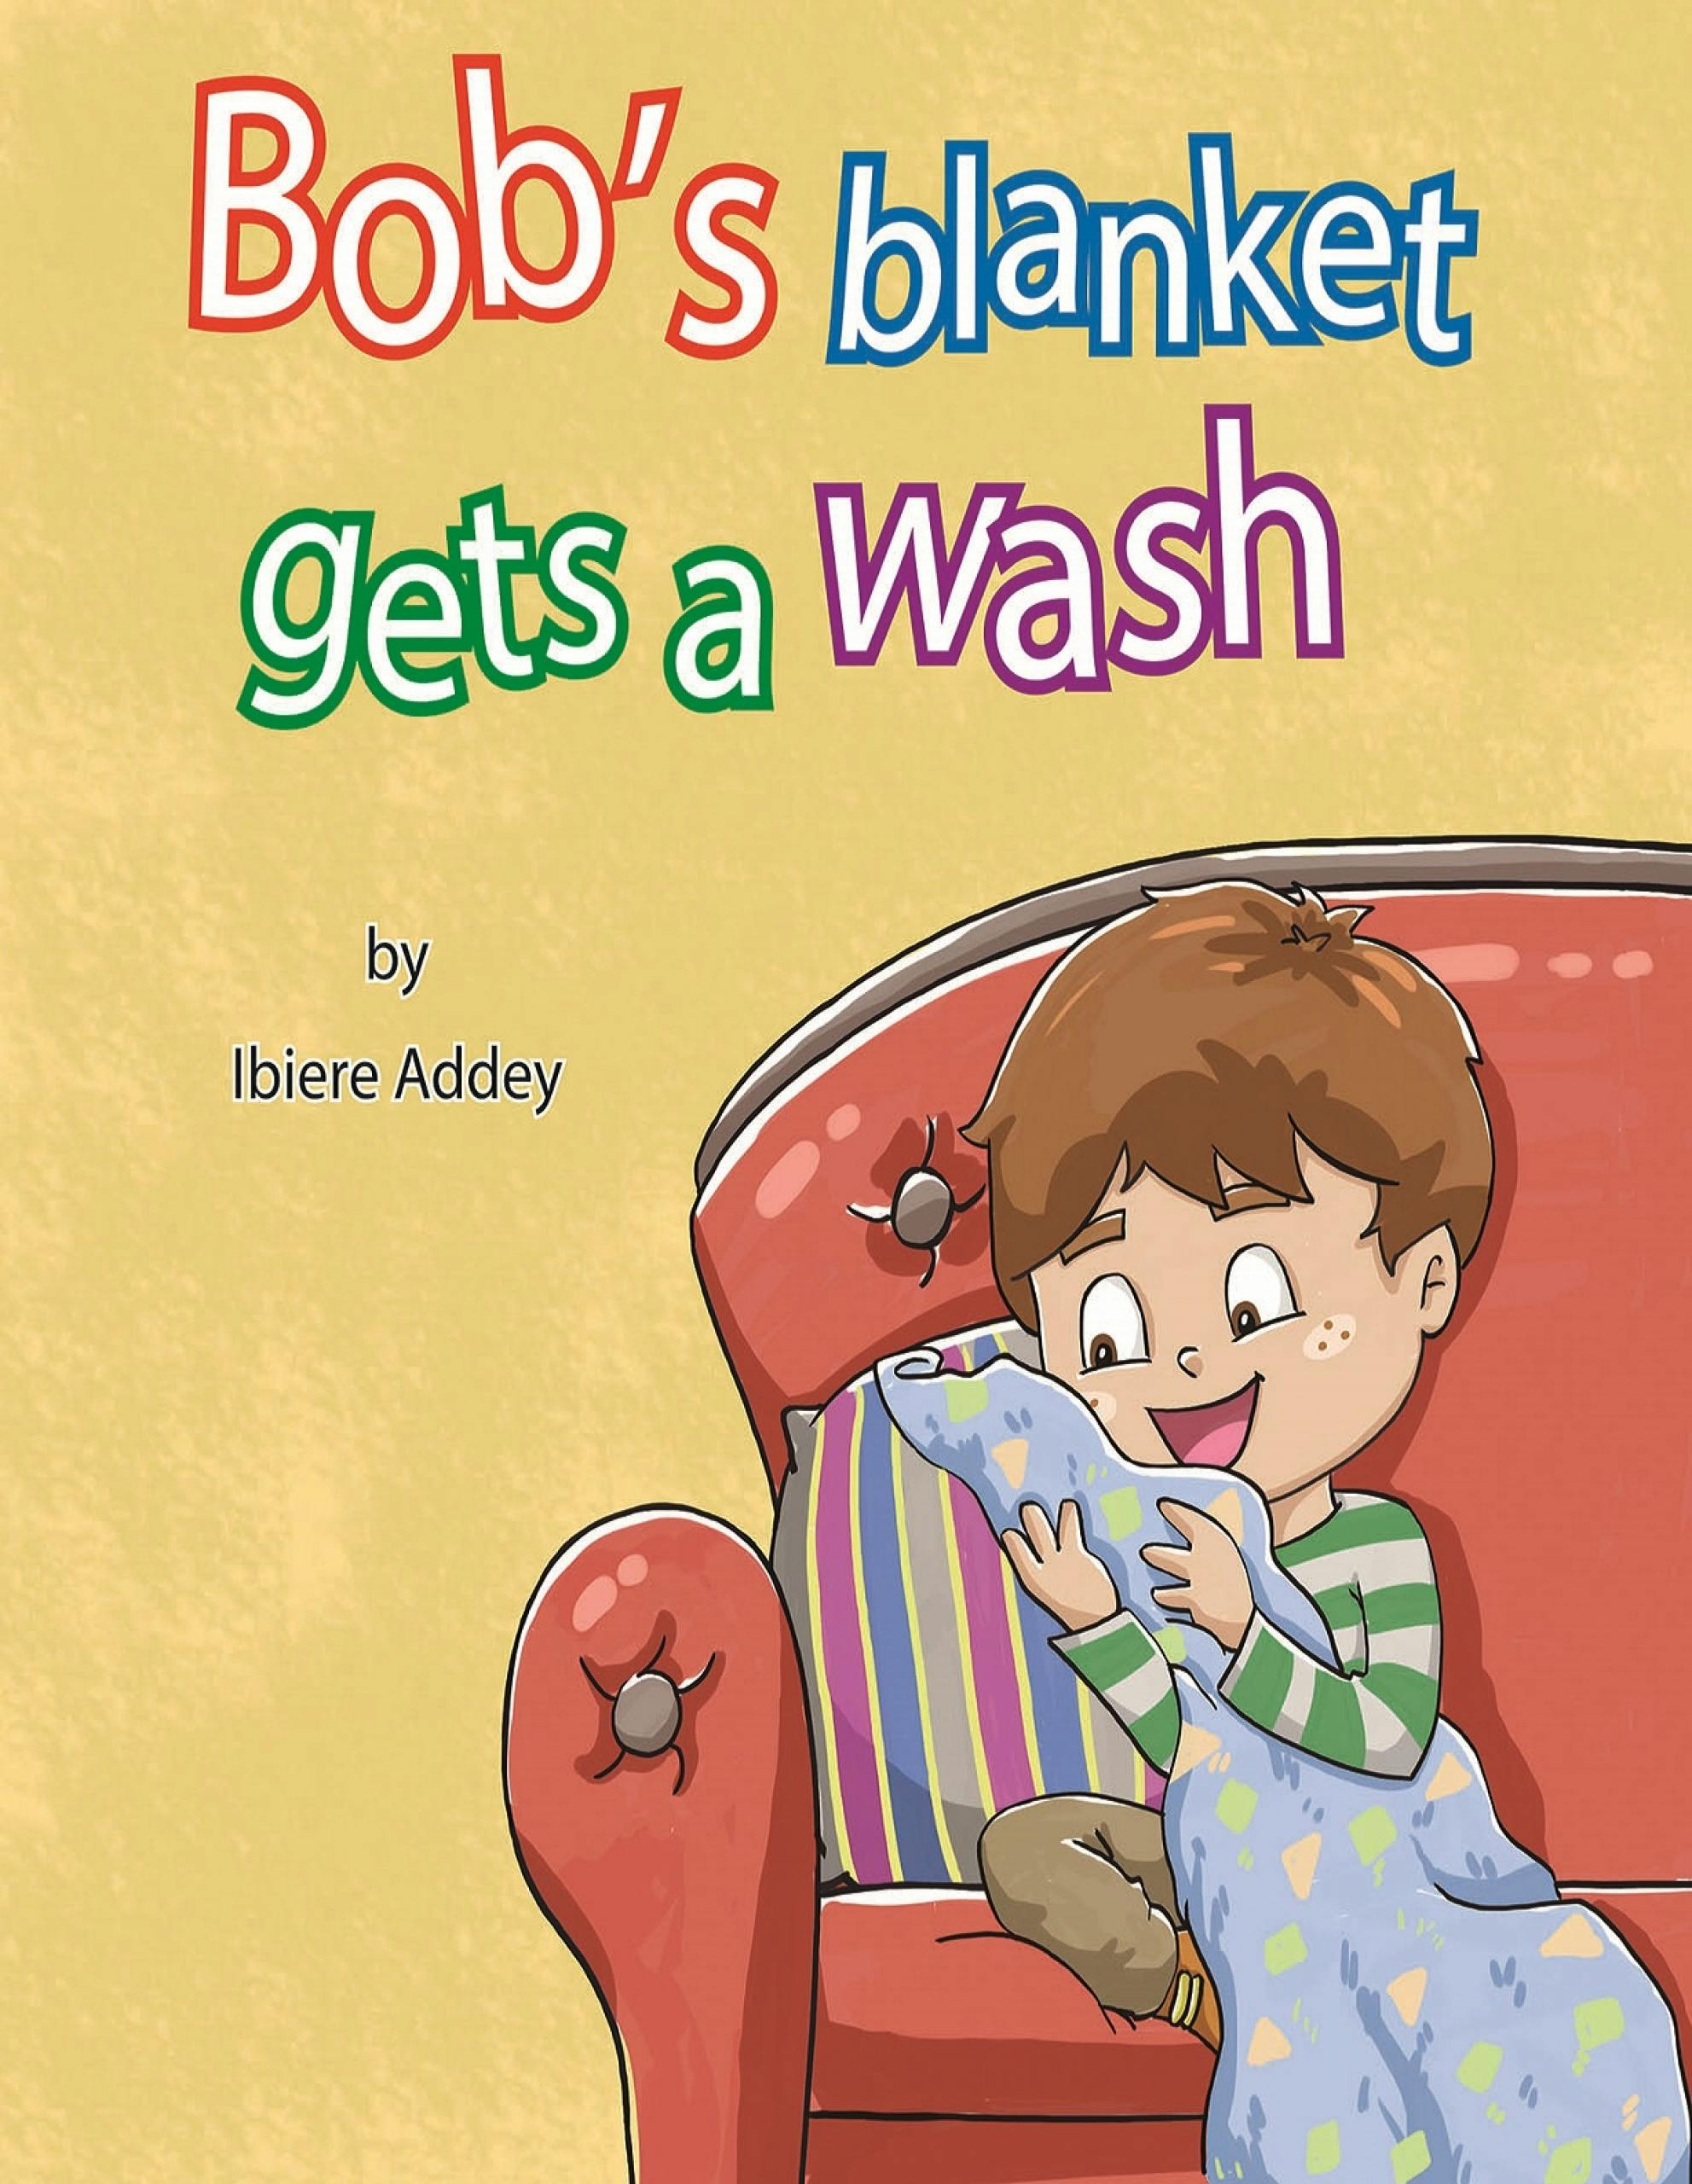 Bob's Blanket gets a wash - undefined